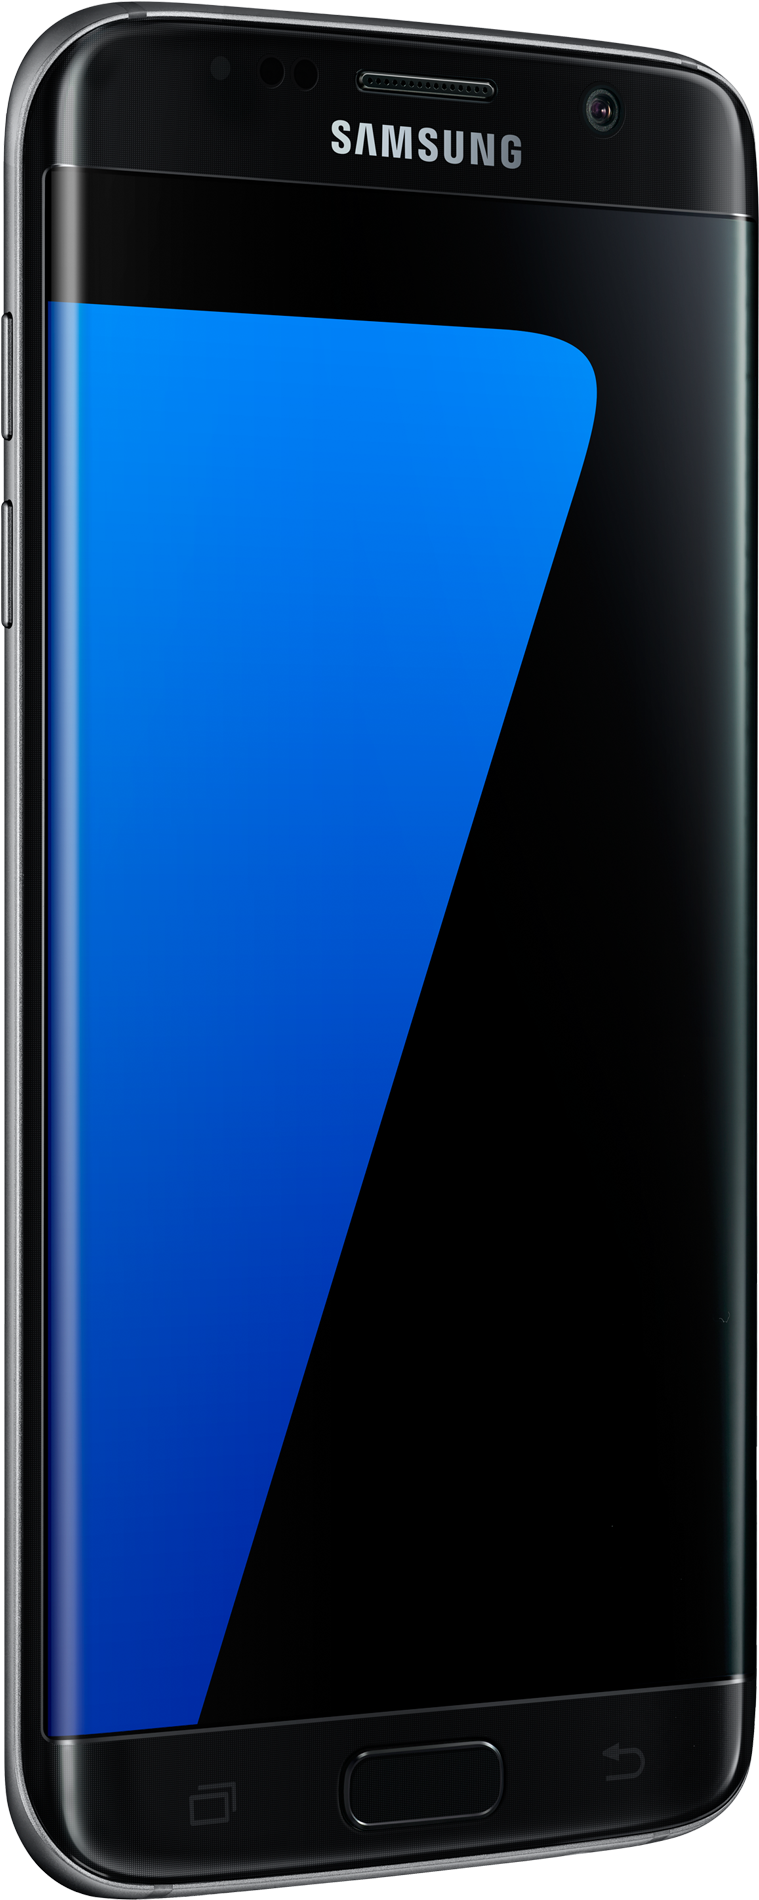 Samsung Edge Smartphone Display PNG